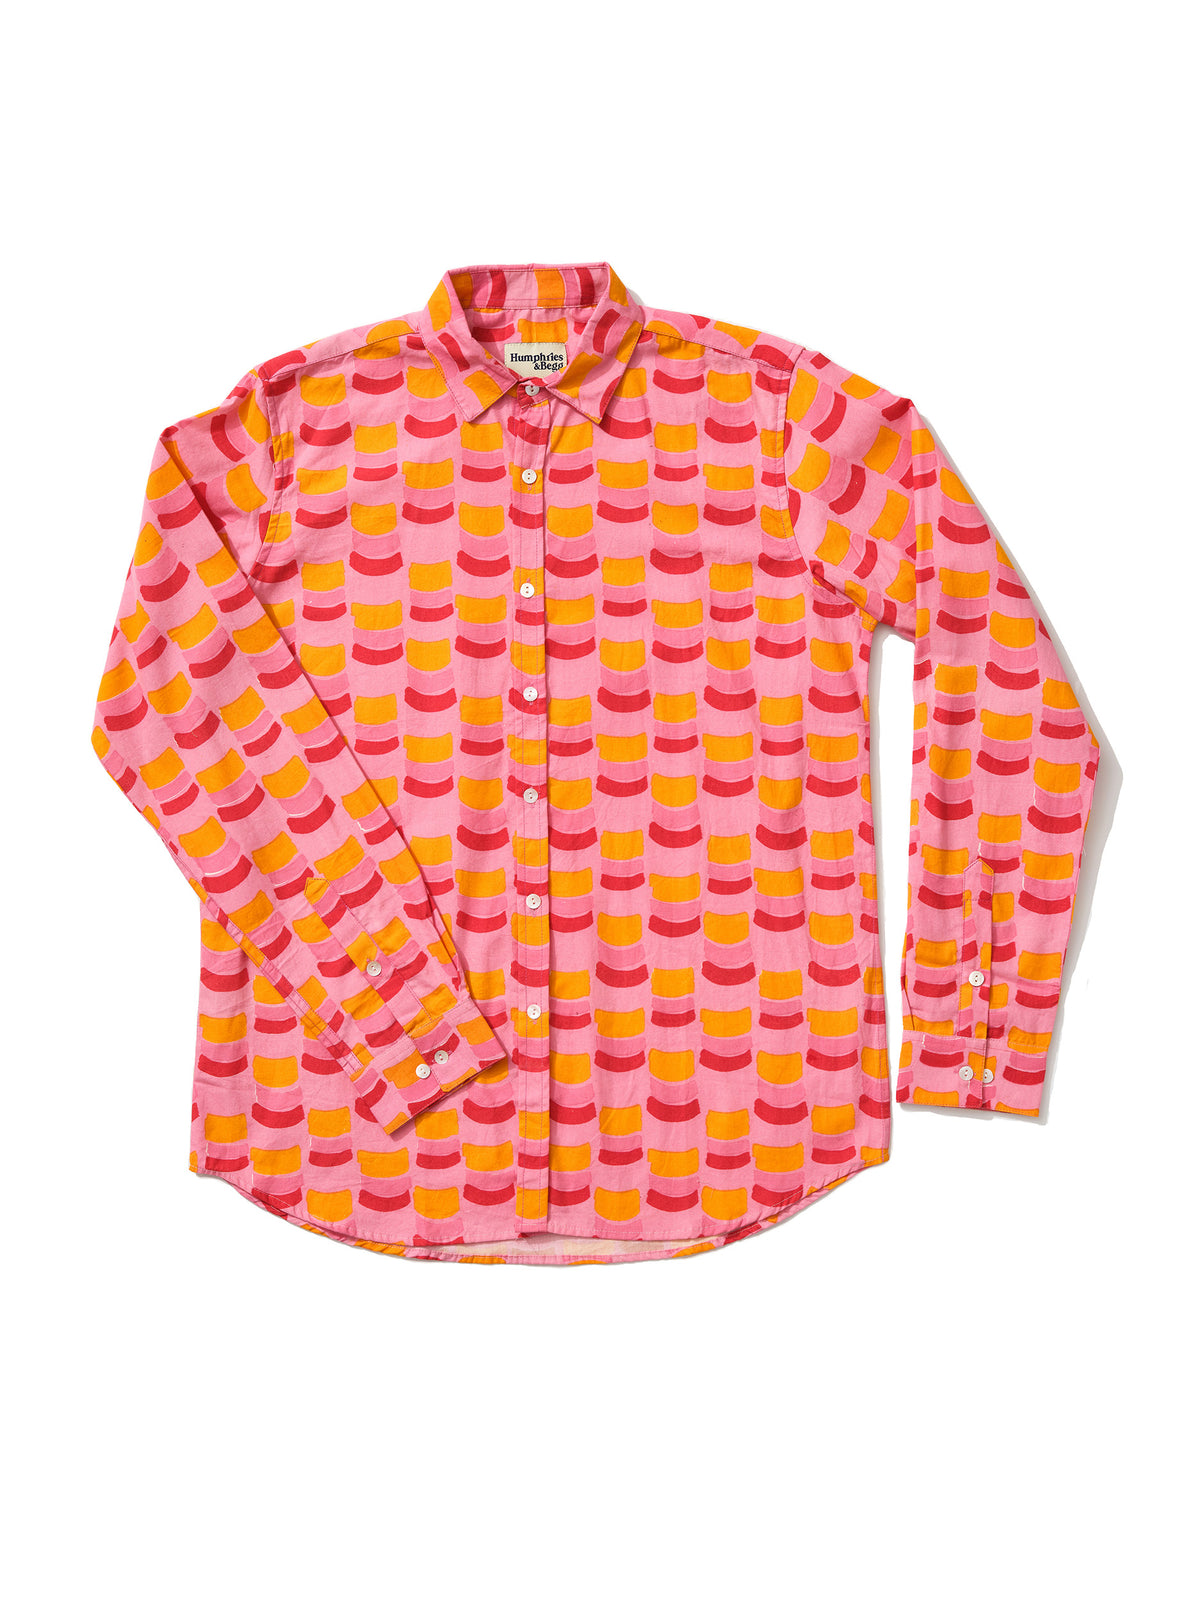 Men's Shirt in 'Citrus Segment'